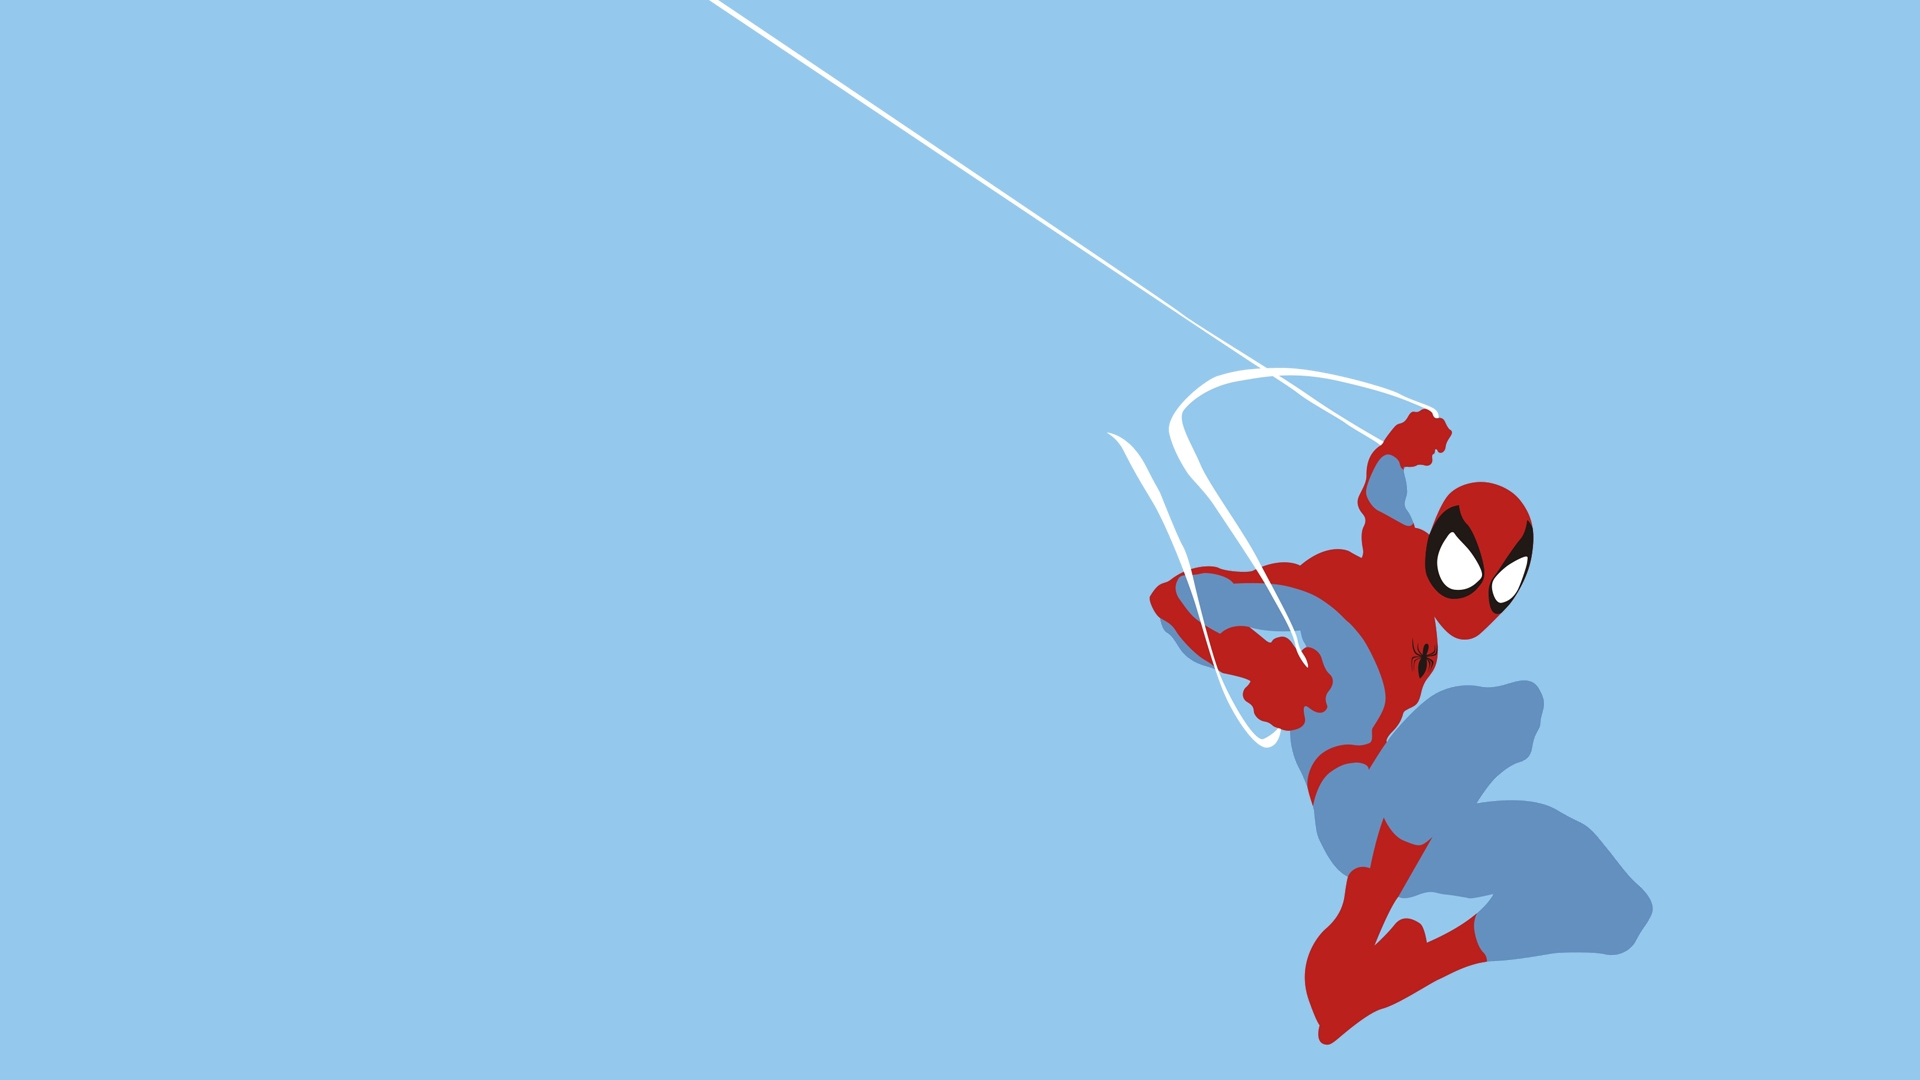 Spider Man HD Wallpaper Background Image 1920x1080 1920x1080